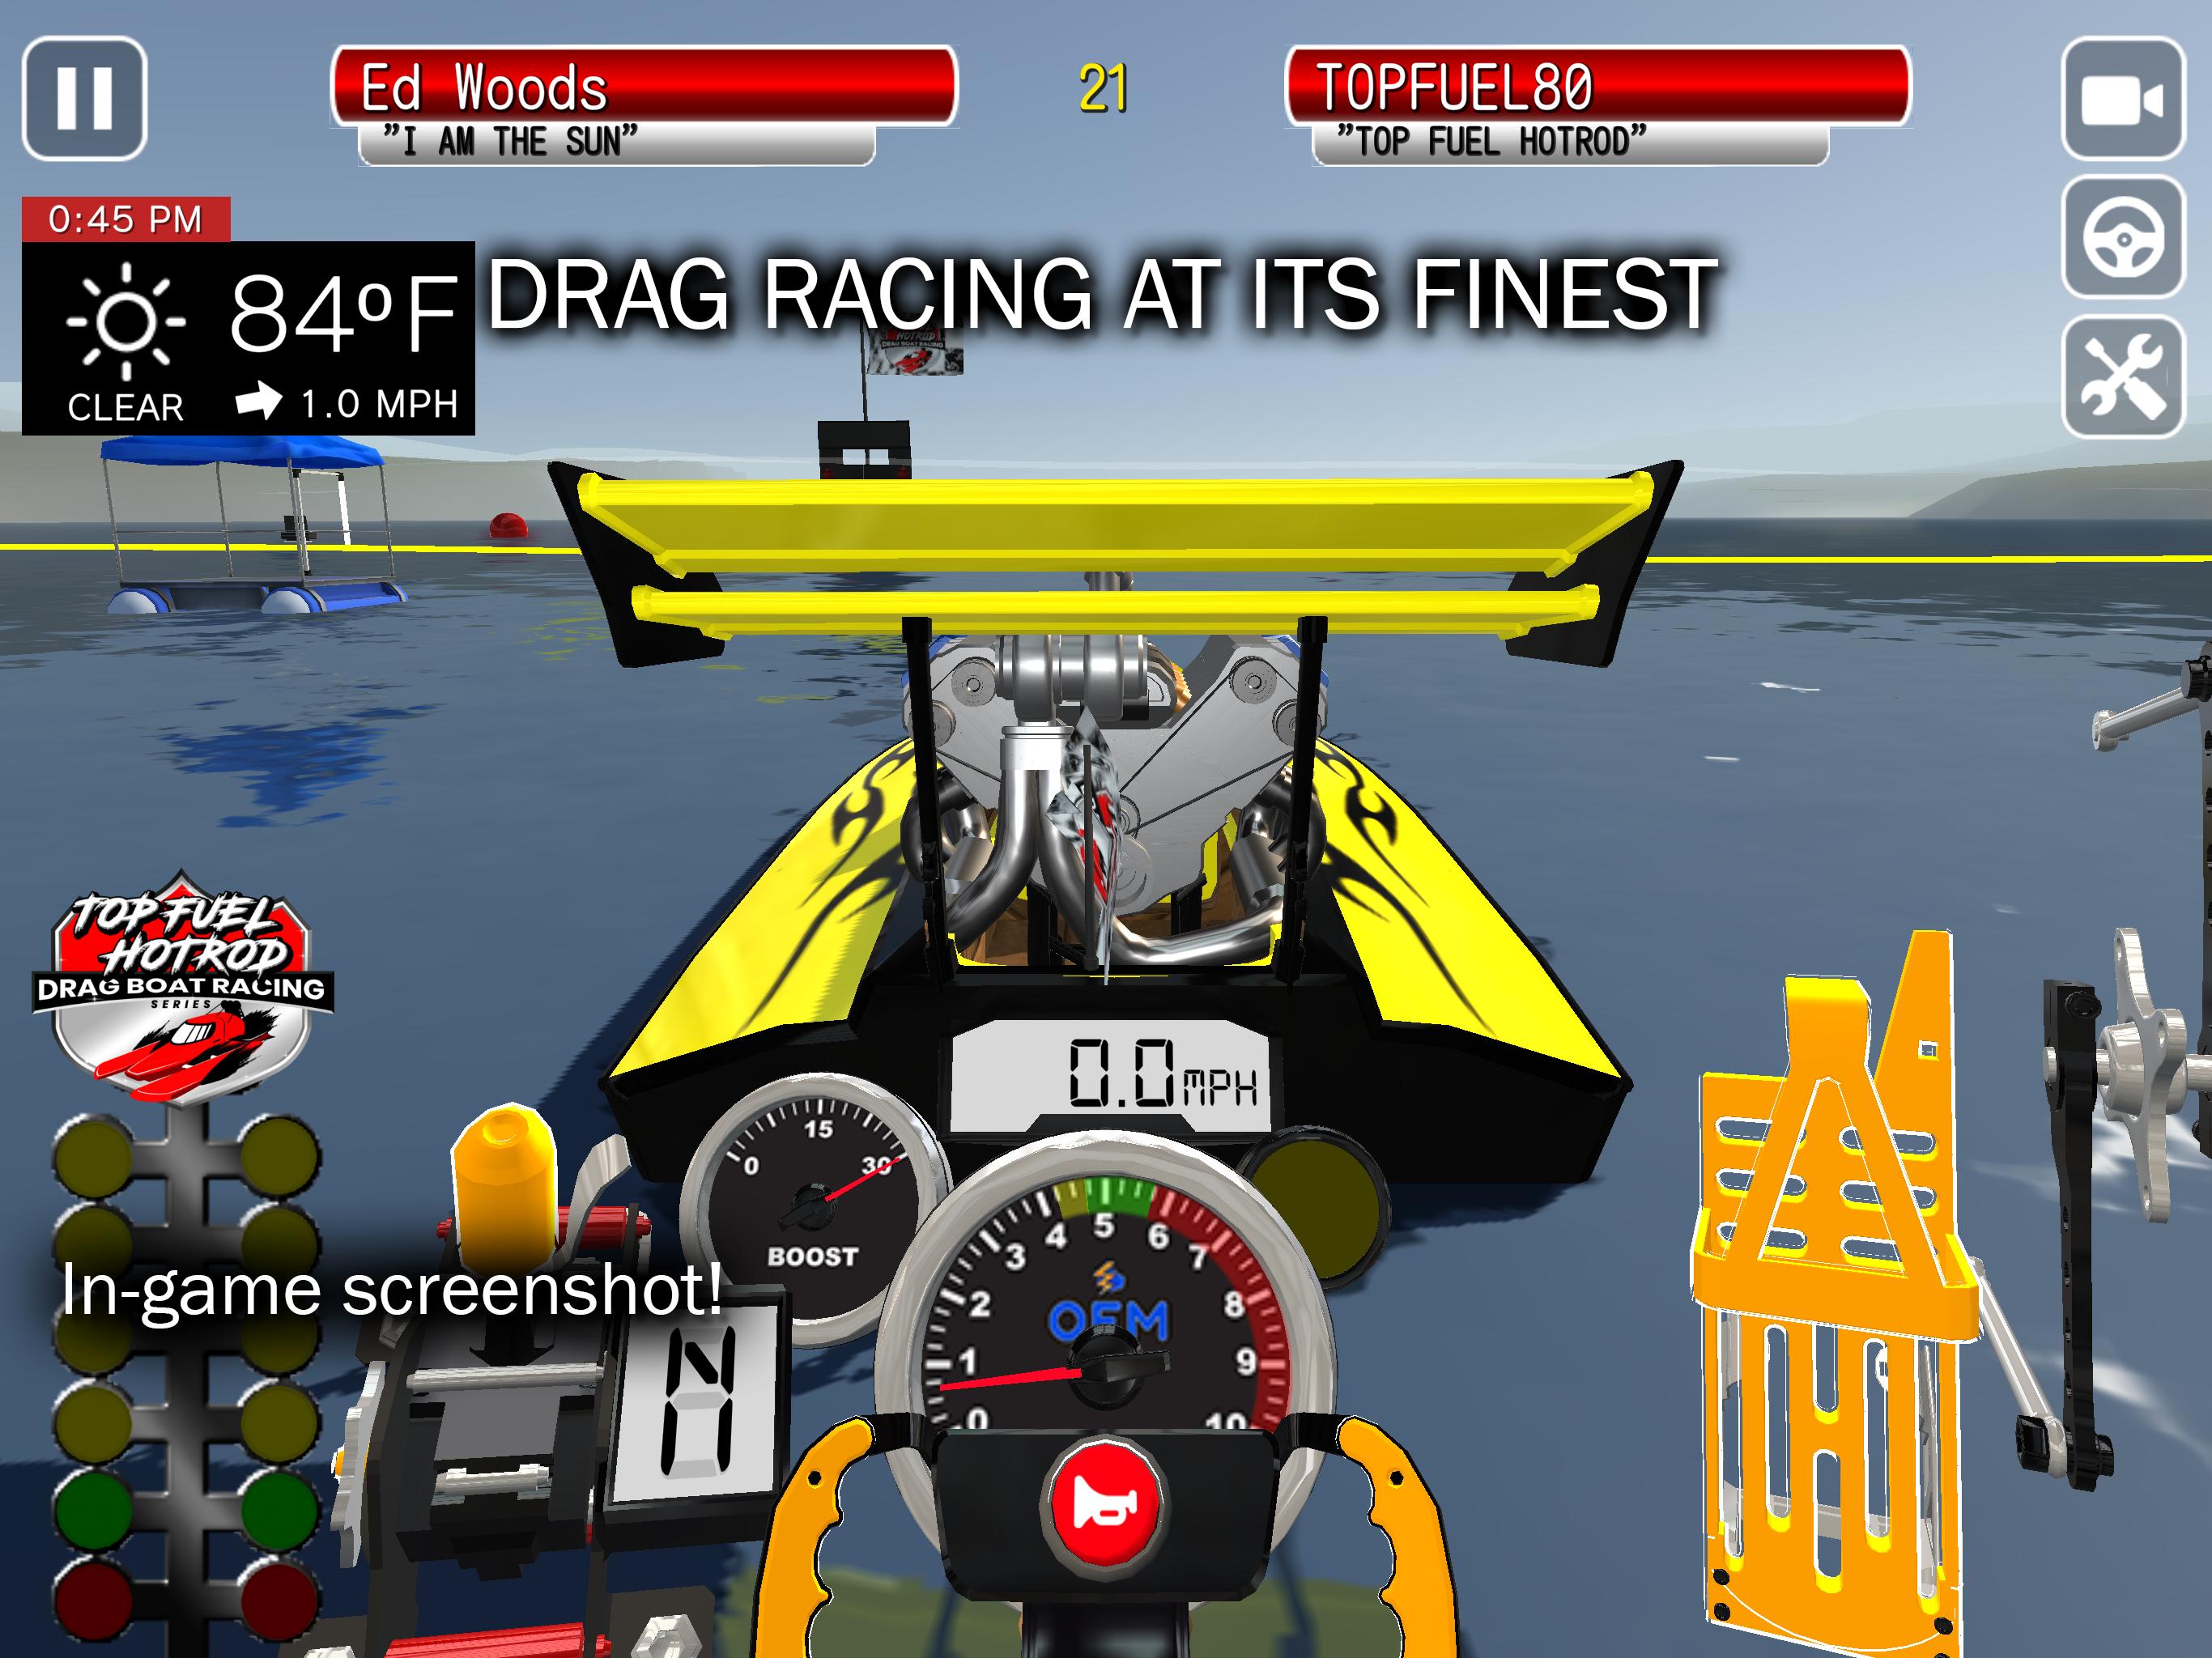 Top Fuel Hot Rod - Drag Boat Speed Racing Game 1.16 Screenshot 13